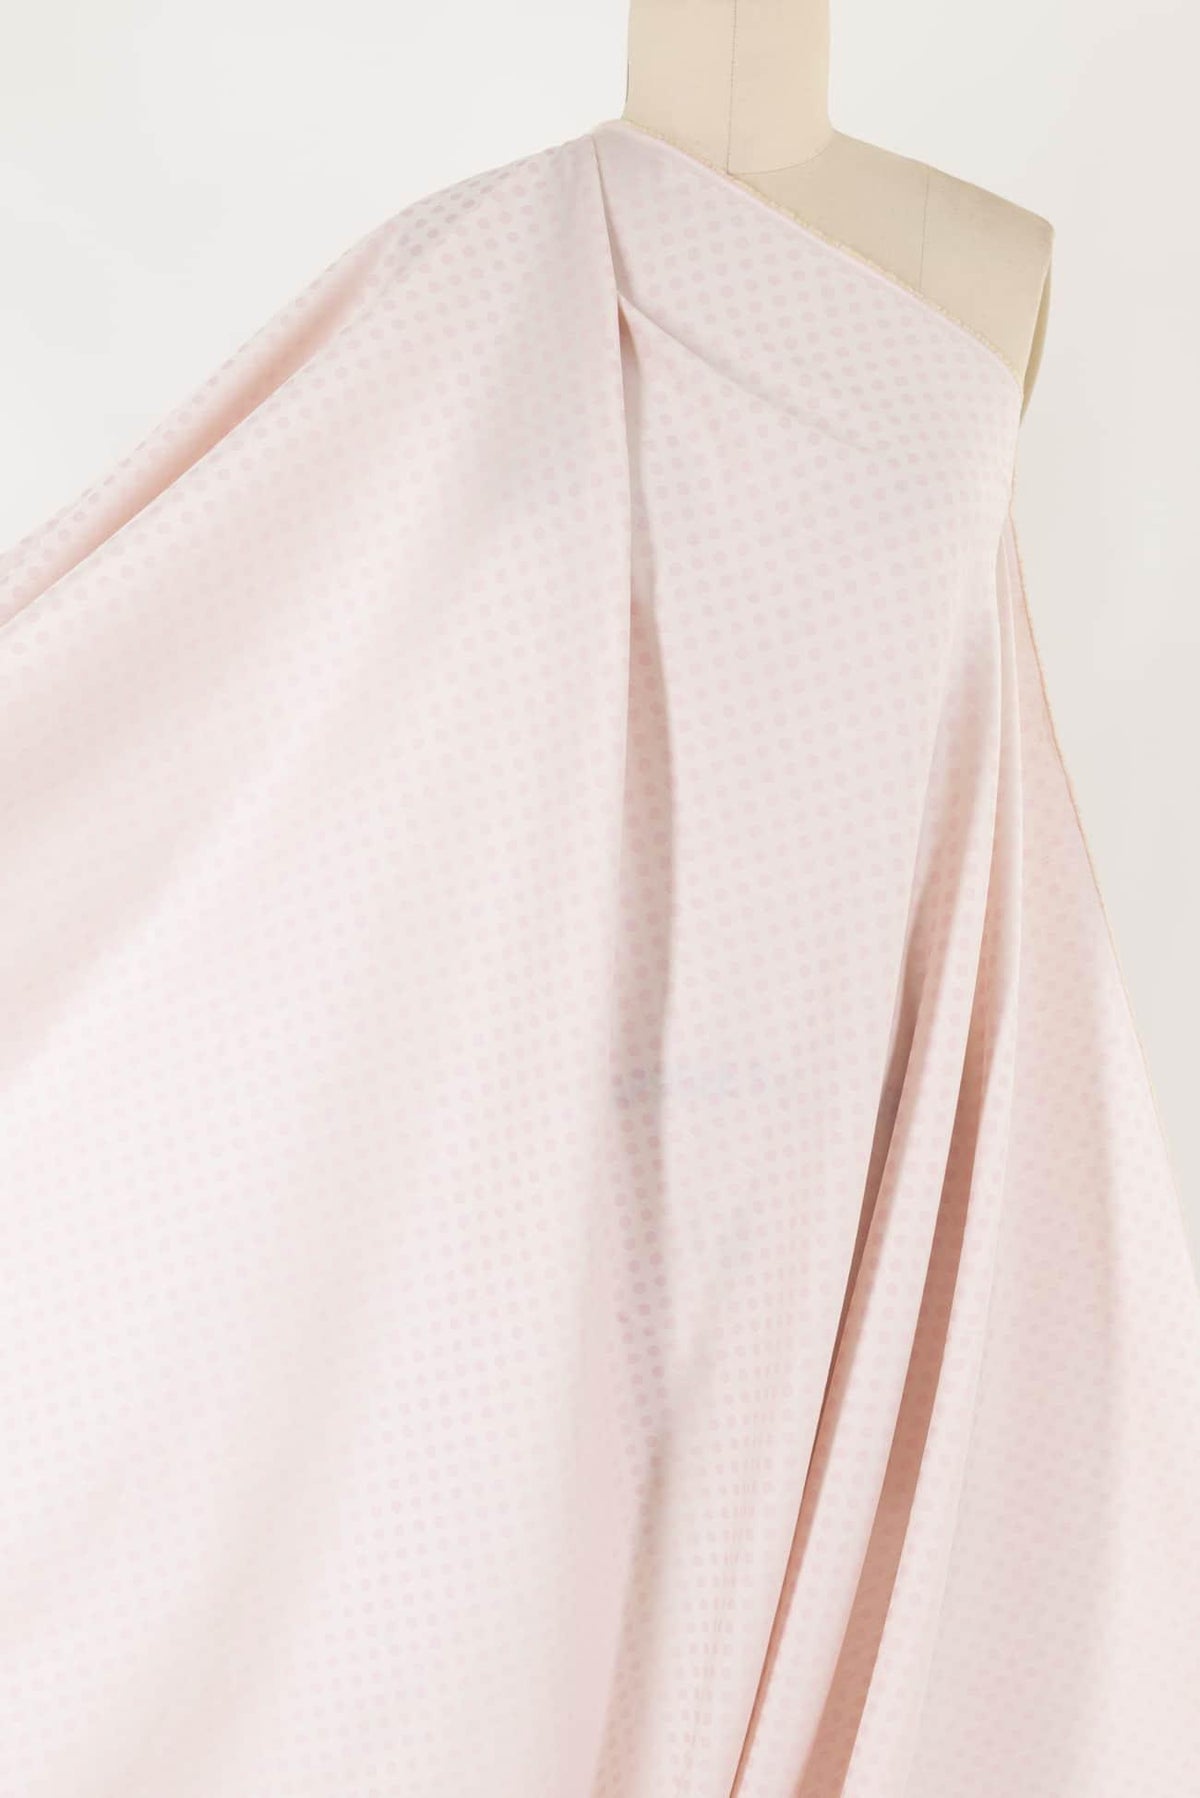 Pinky Dots Japanese Cotton Jacquard Woven - Marcy Tilton Fabrics